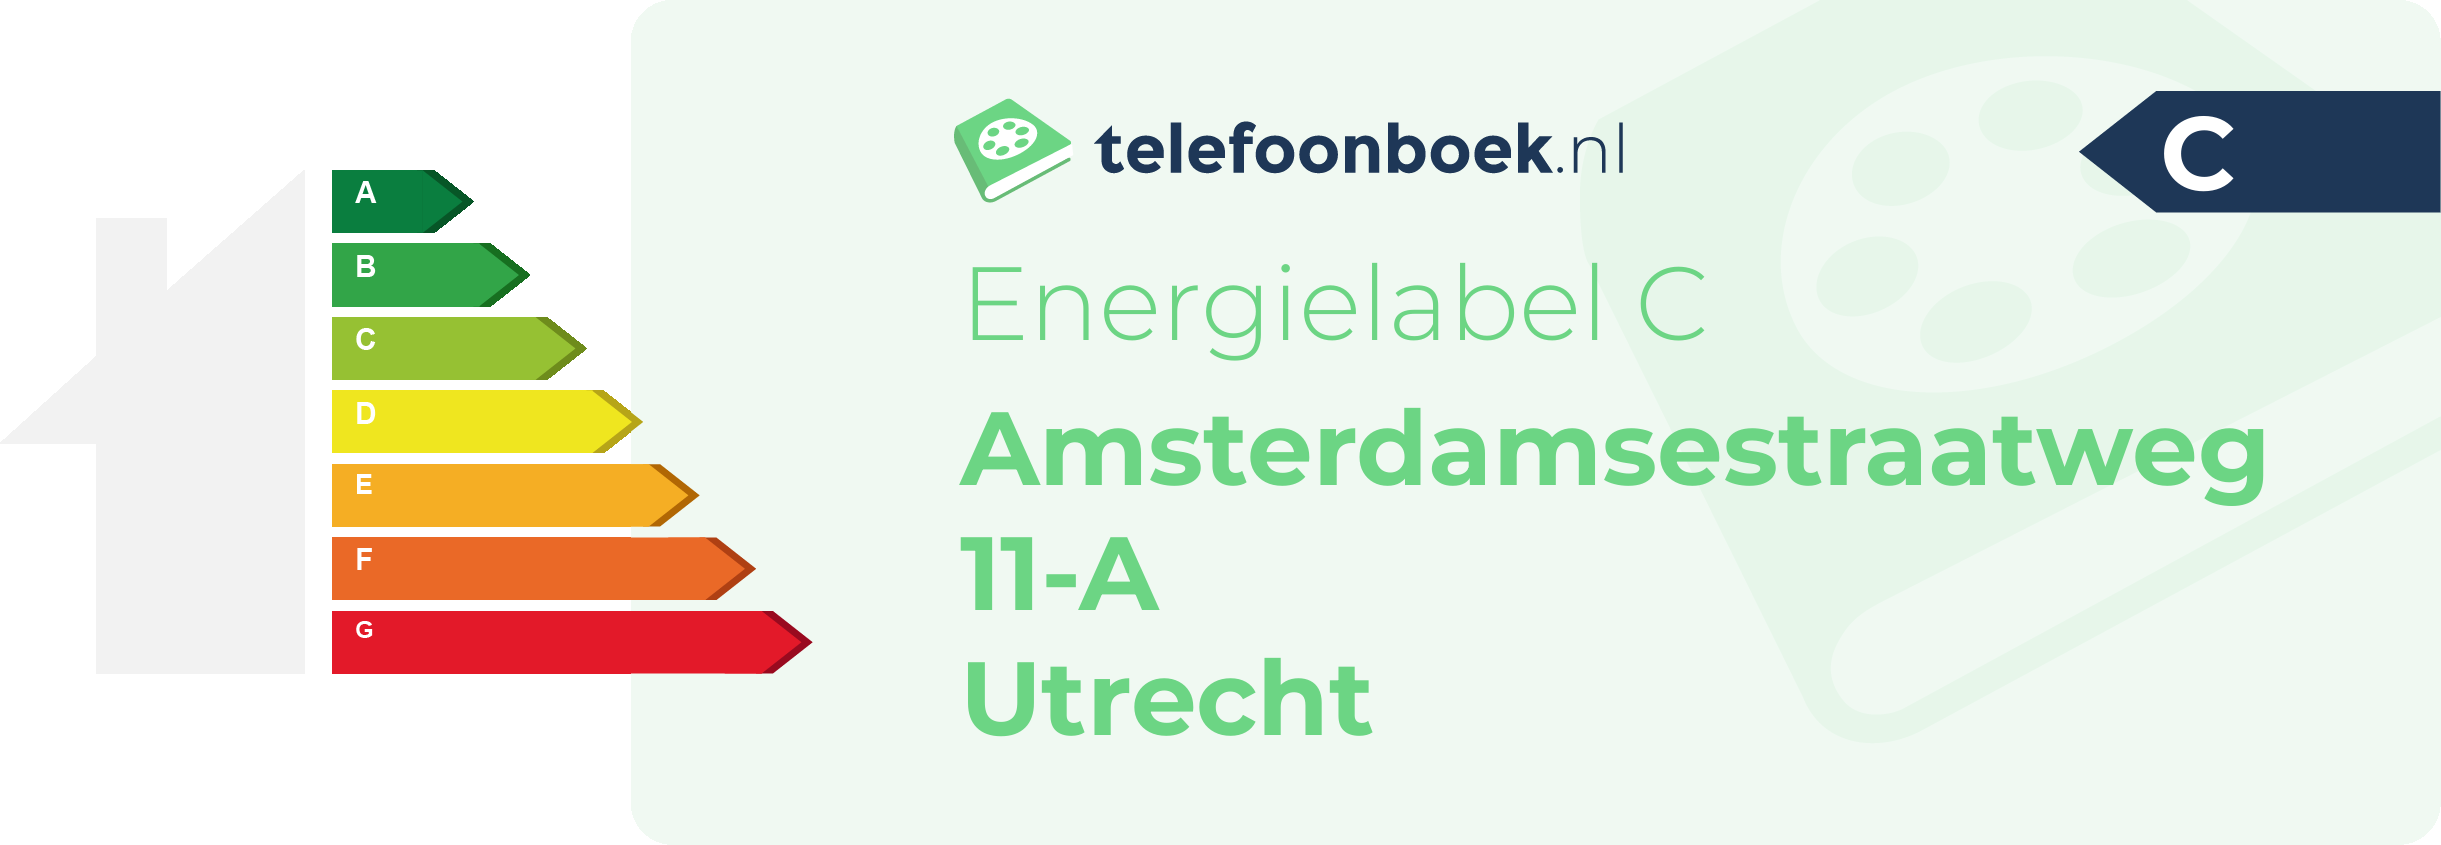 Energielabel Amsterdamsestraatweg 11-A Utrecht